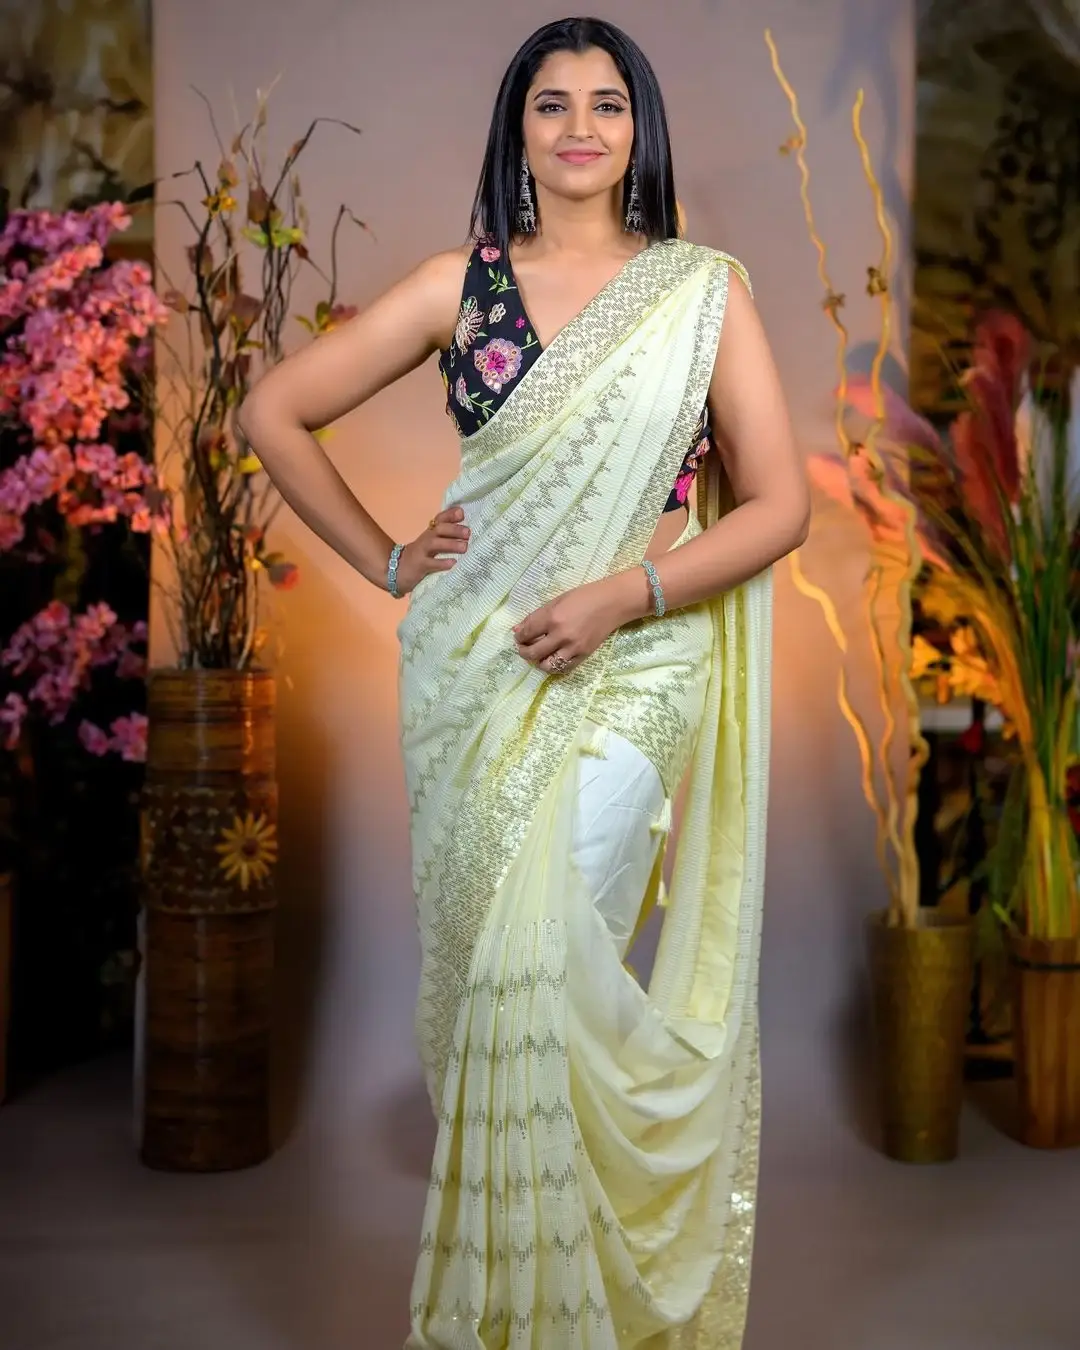 INDIAN TELEVISION ACTRESS SHYAMALA IN WHITE SAREE